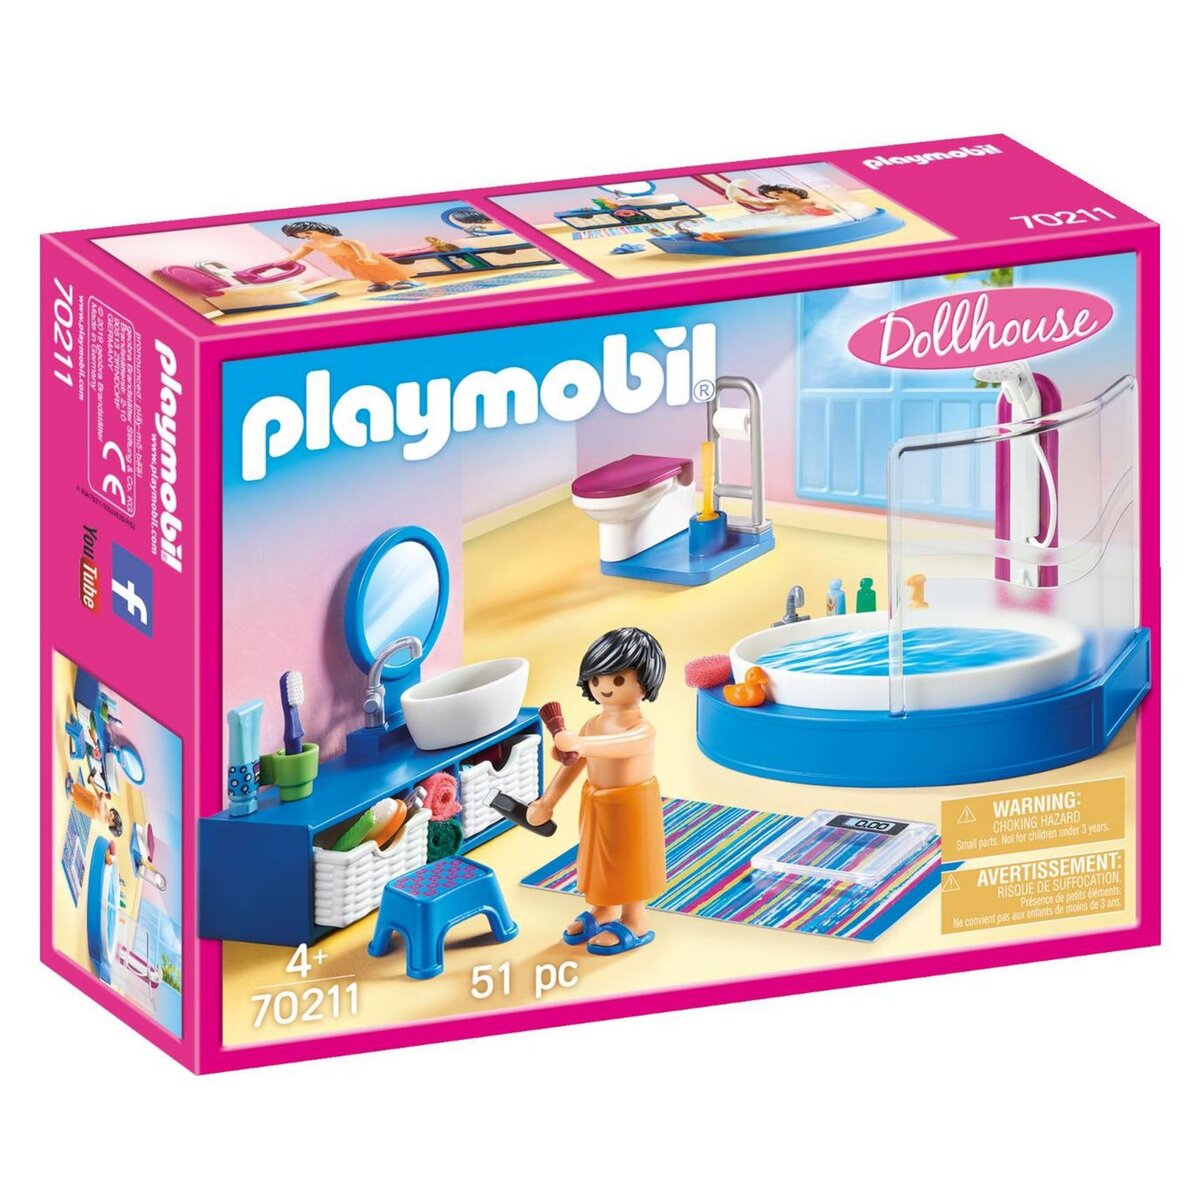 Château Playmobil en solde